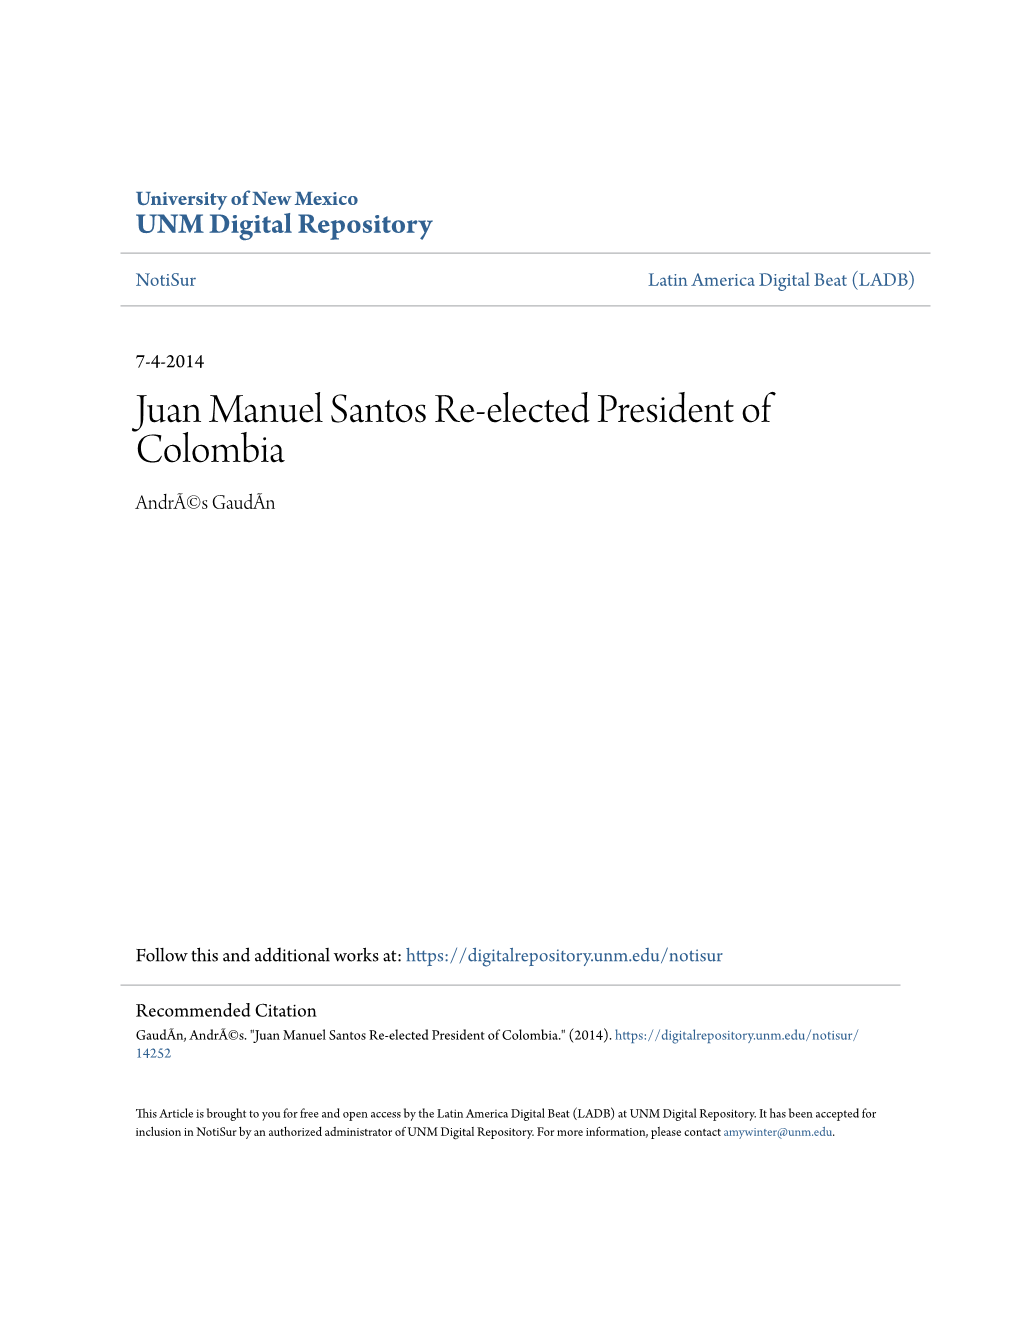 Juan Manuel Santos Re-Elected President of Colombia Andrã©S Gaudãn